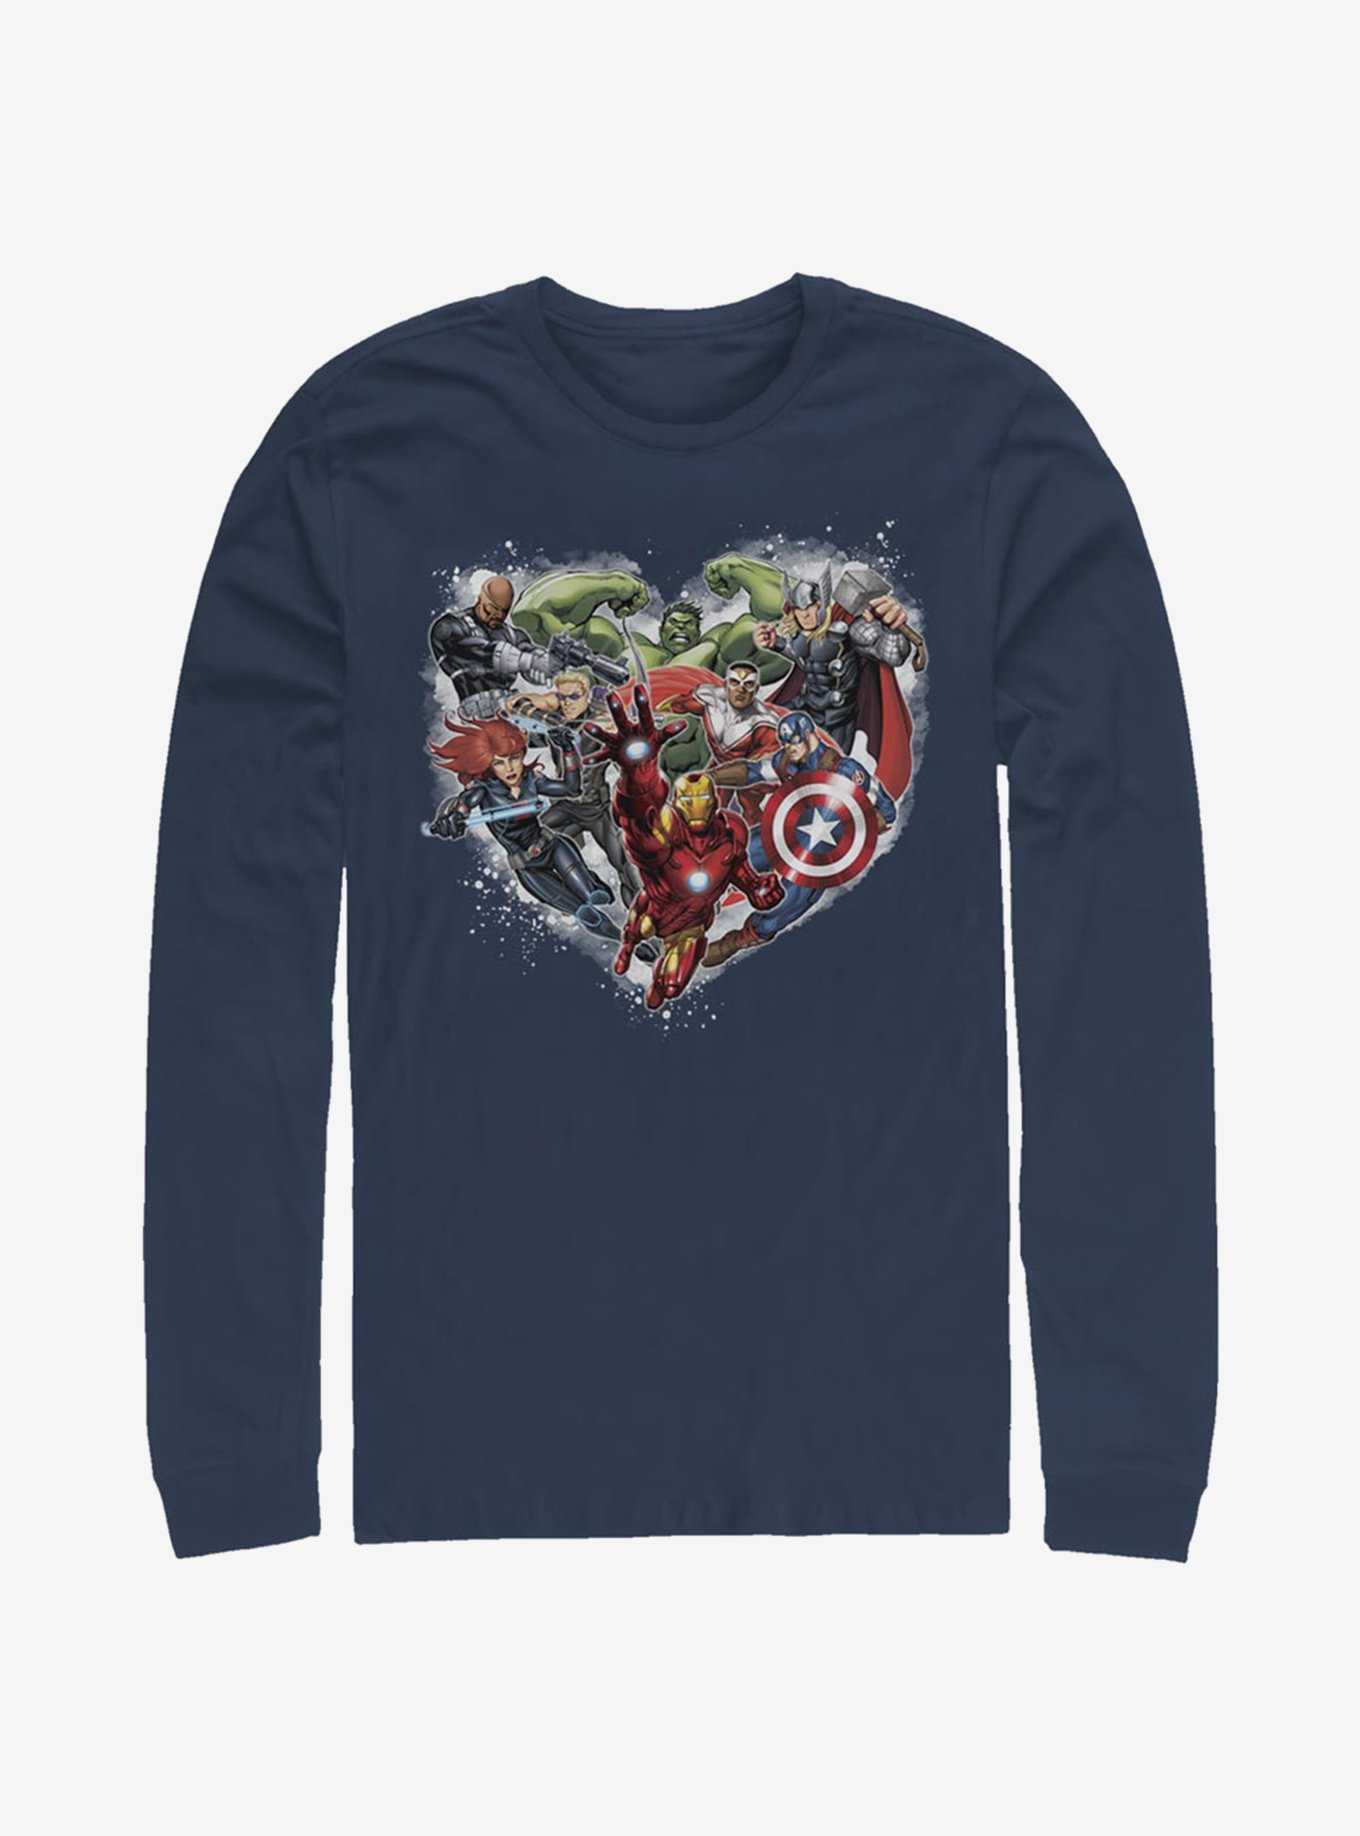 OFFICIAL Merchandise | Avengers & Her Universe Shirts